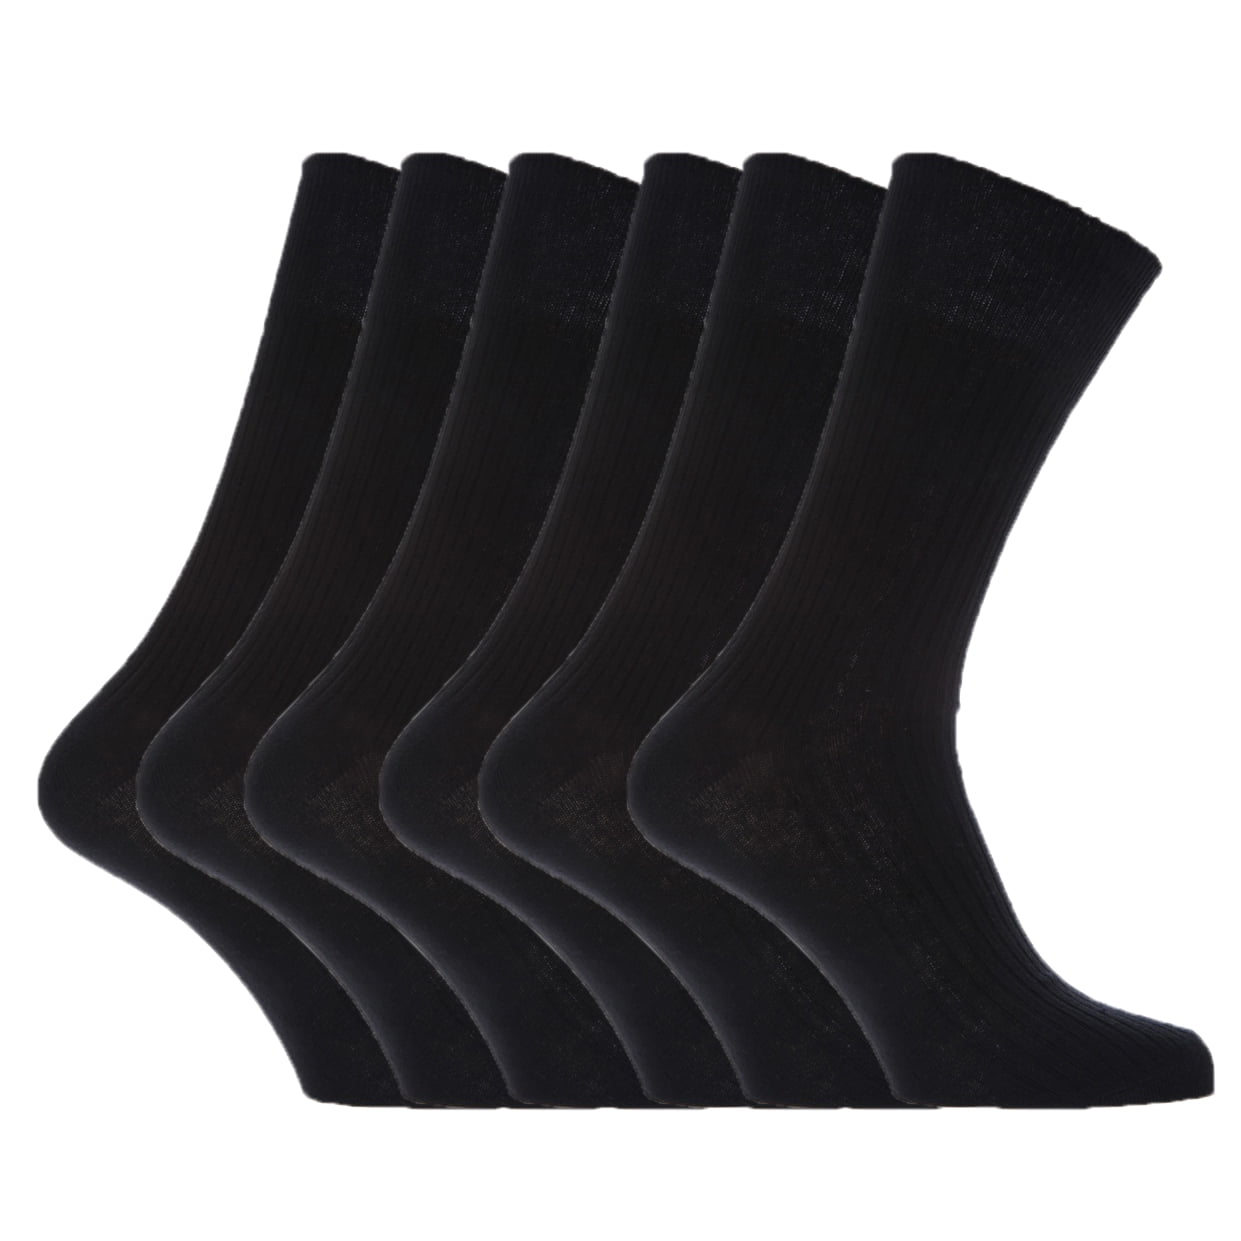 Seamless Toe Grandeur Hosiery Mens Diabetic Crew Cotton Socks 3-Pair Big and Tall Available Non-Binding Loose Top 